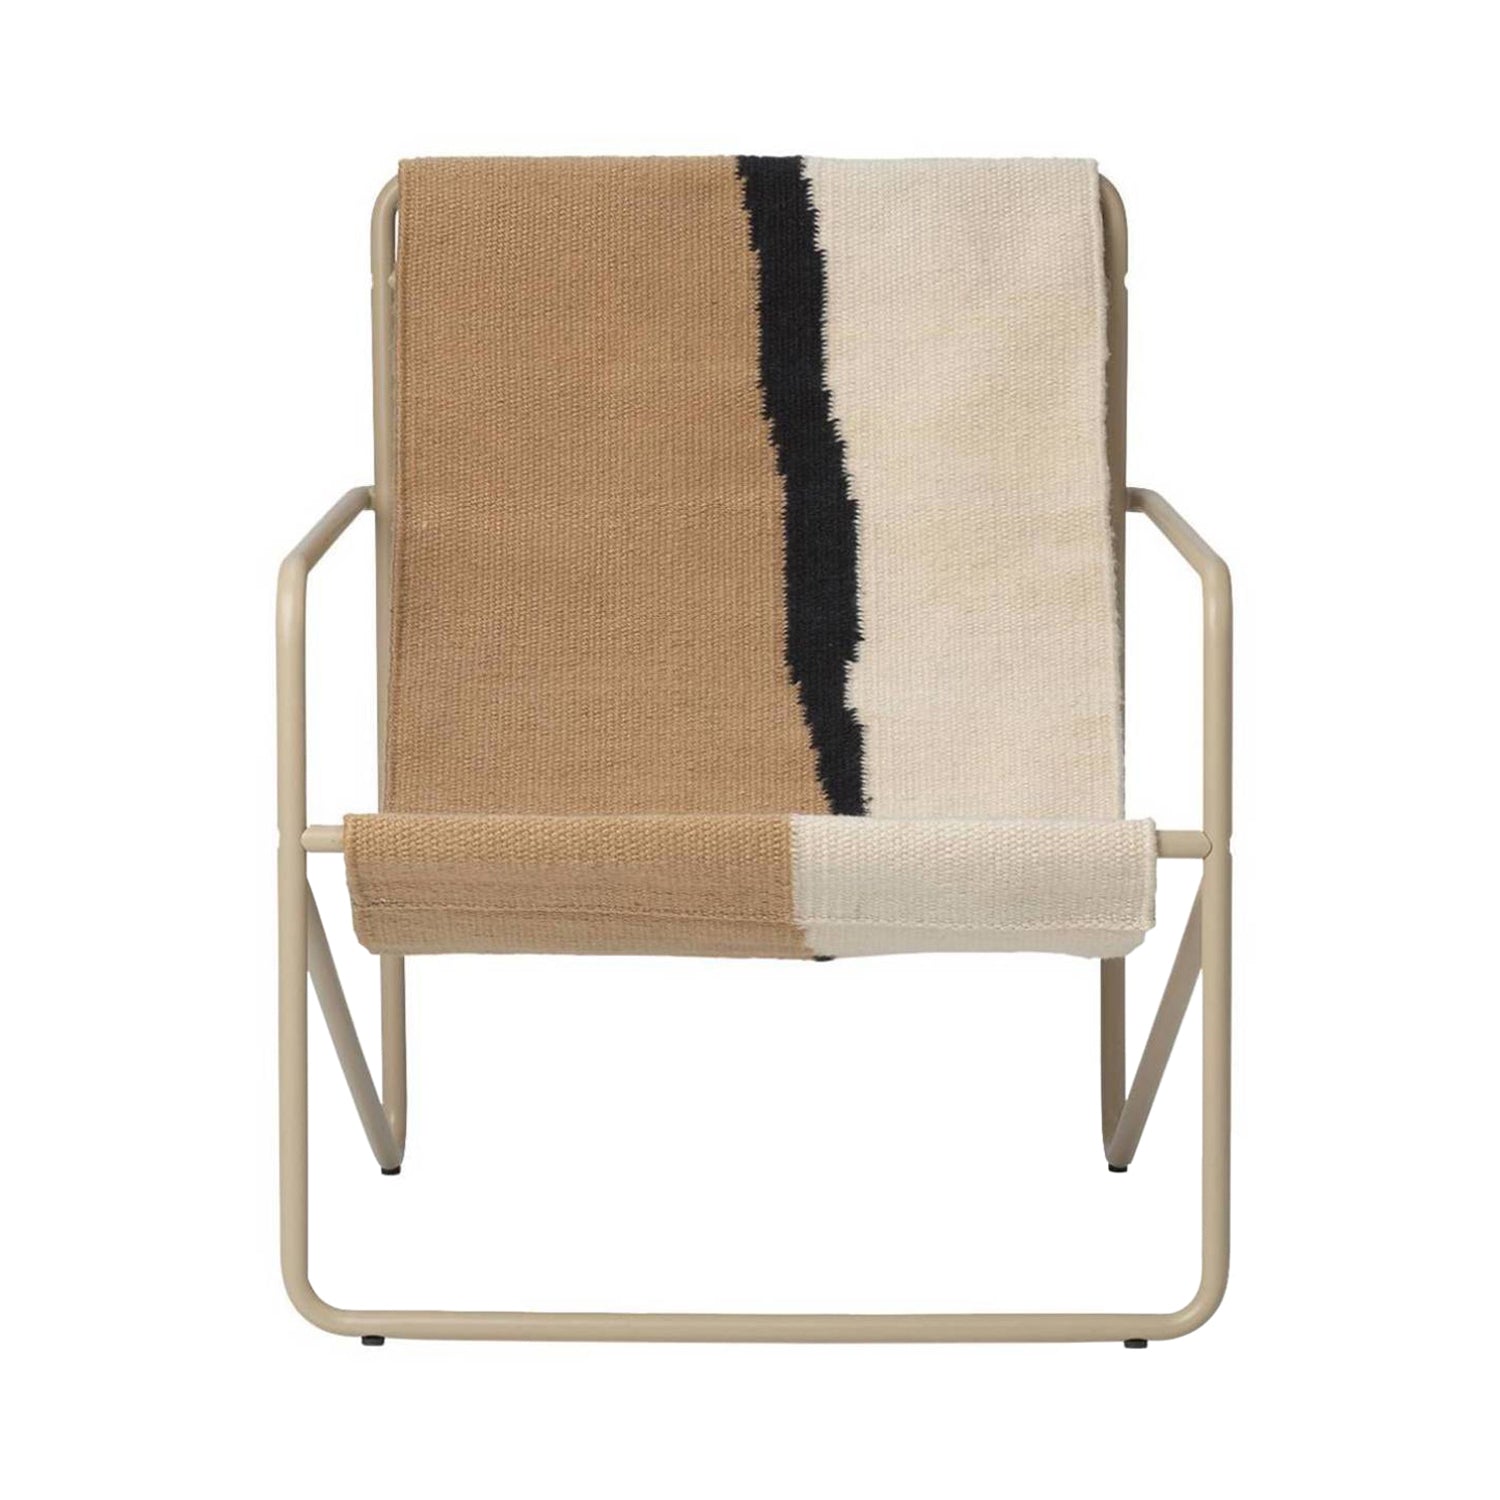 Desert Lounge Chair: Soil + Cashmere